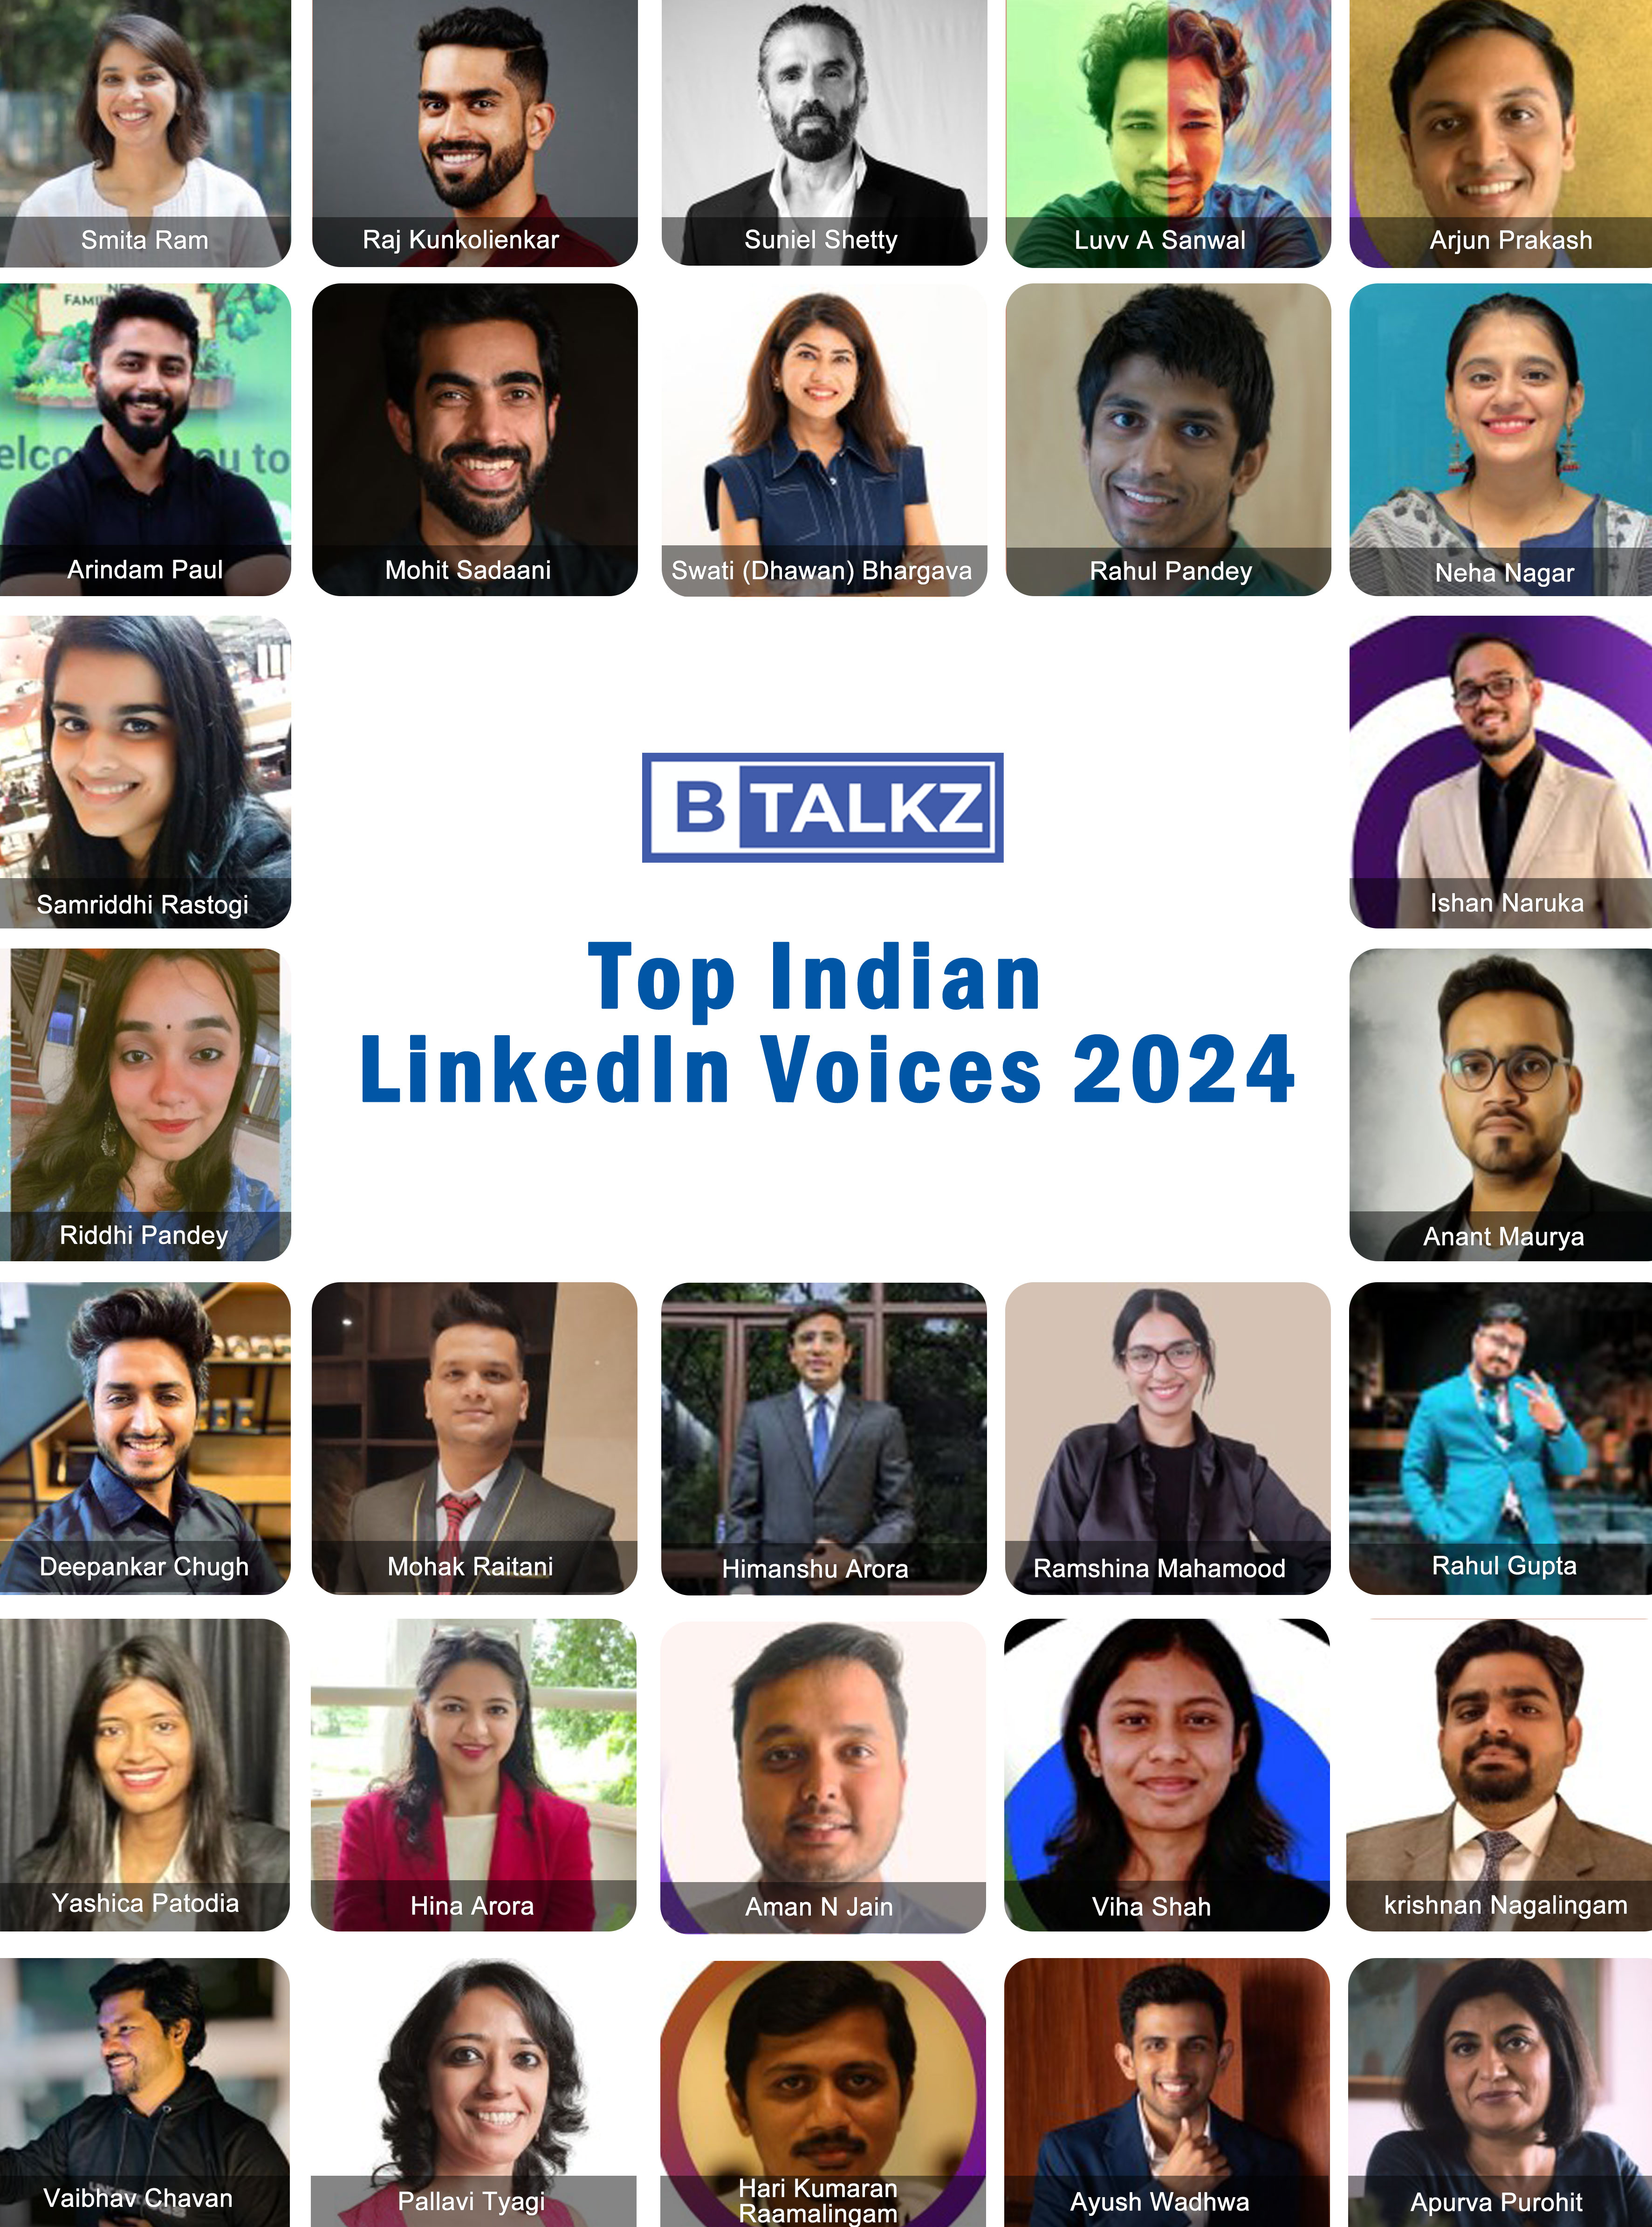 Leading LinkedIn Voices 2024